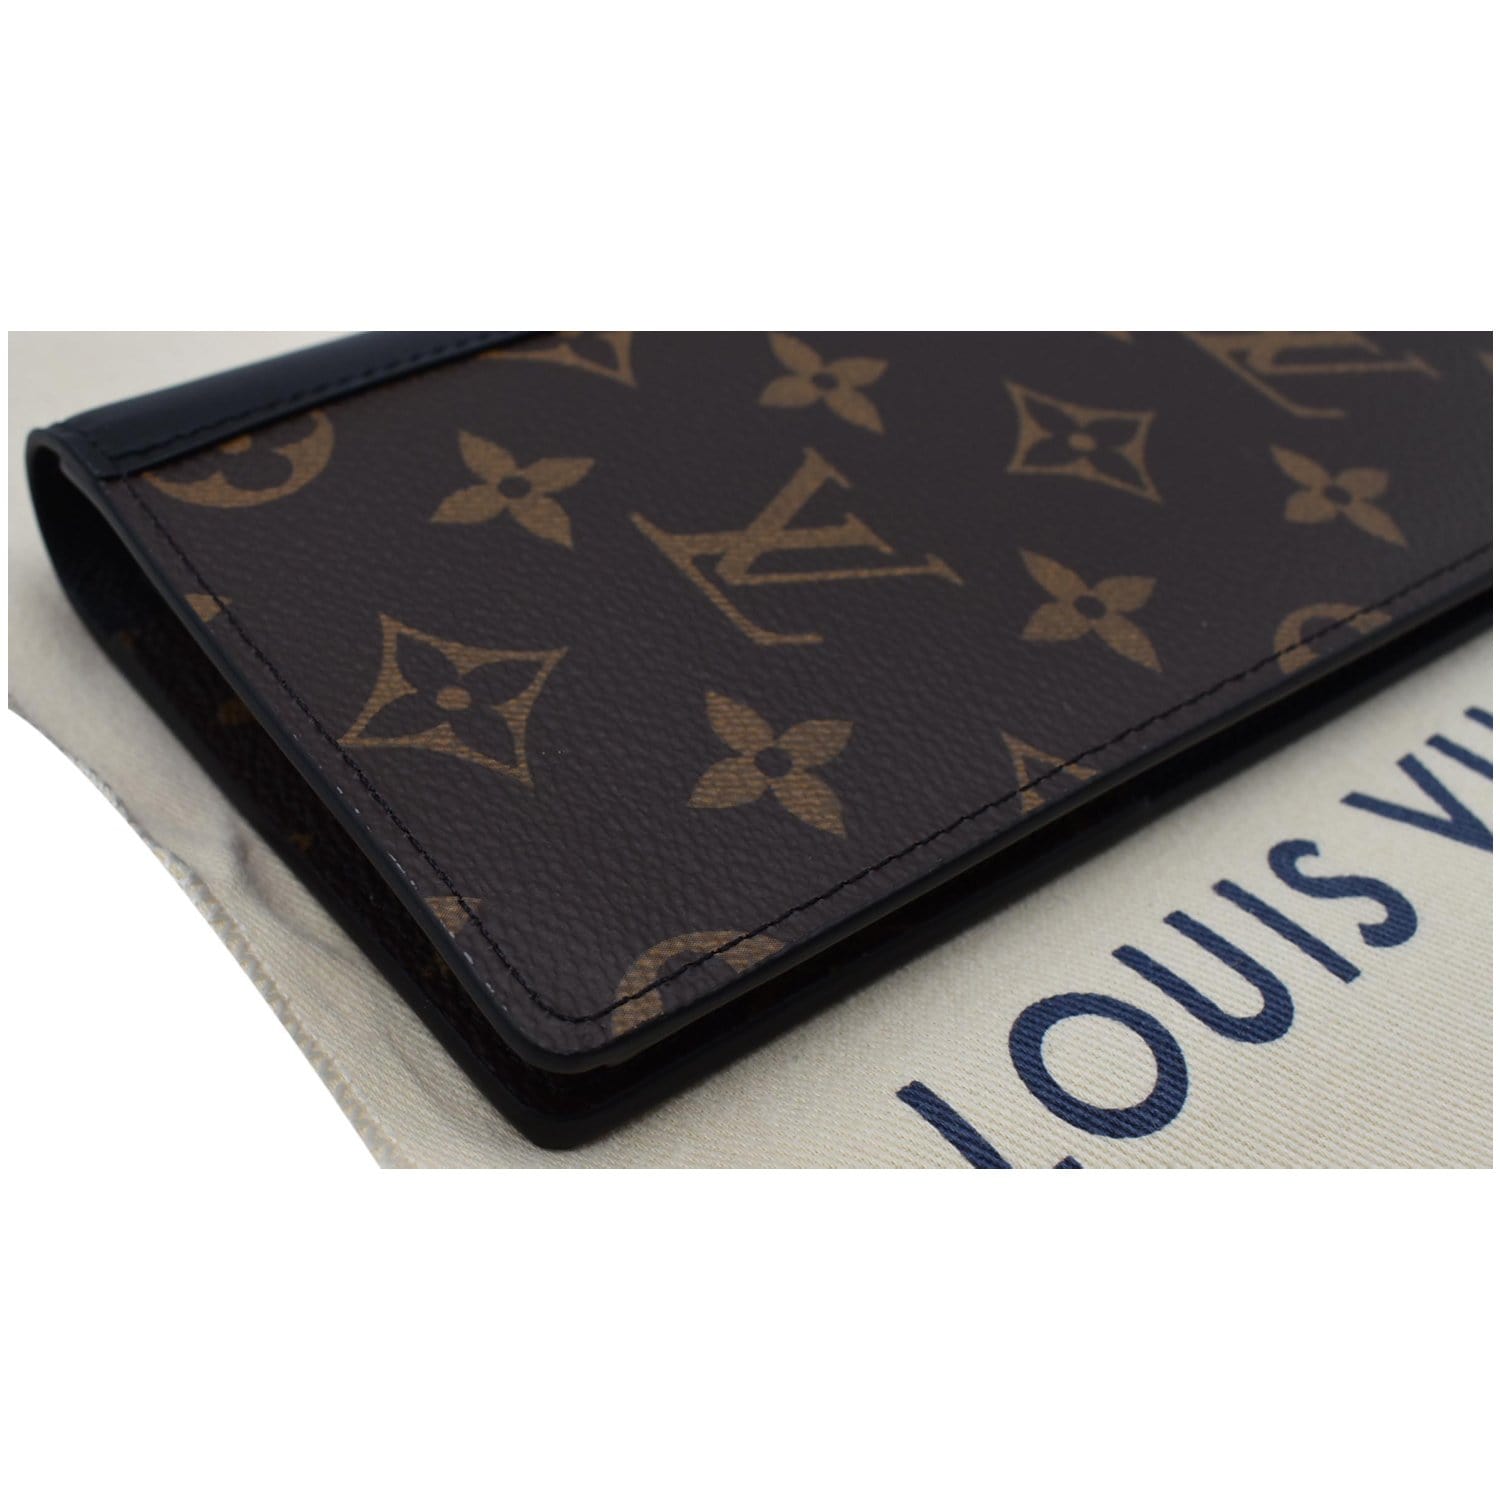 Shop Louis Vuitton MONOGRAM MACASSAR Brazza wallet (M69410) by iRodori03